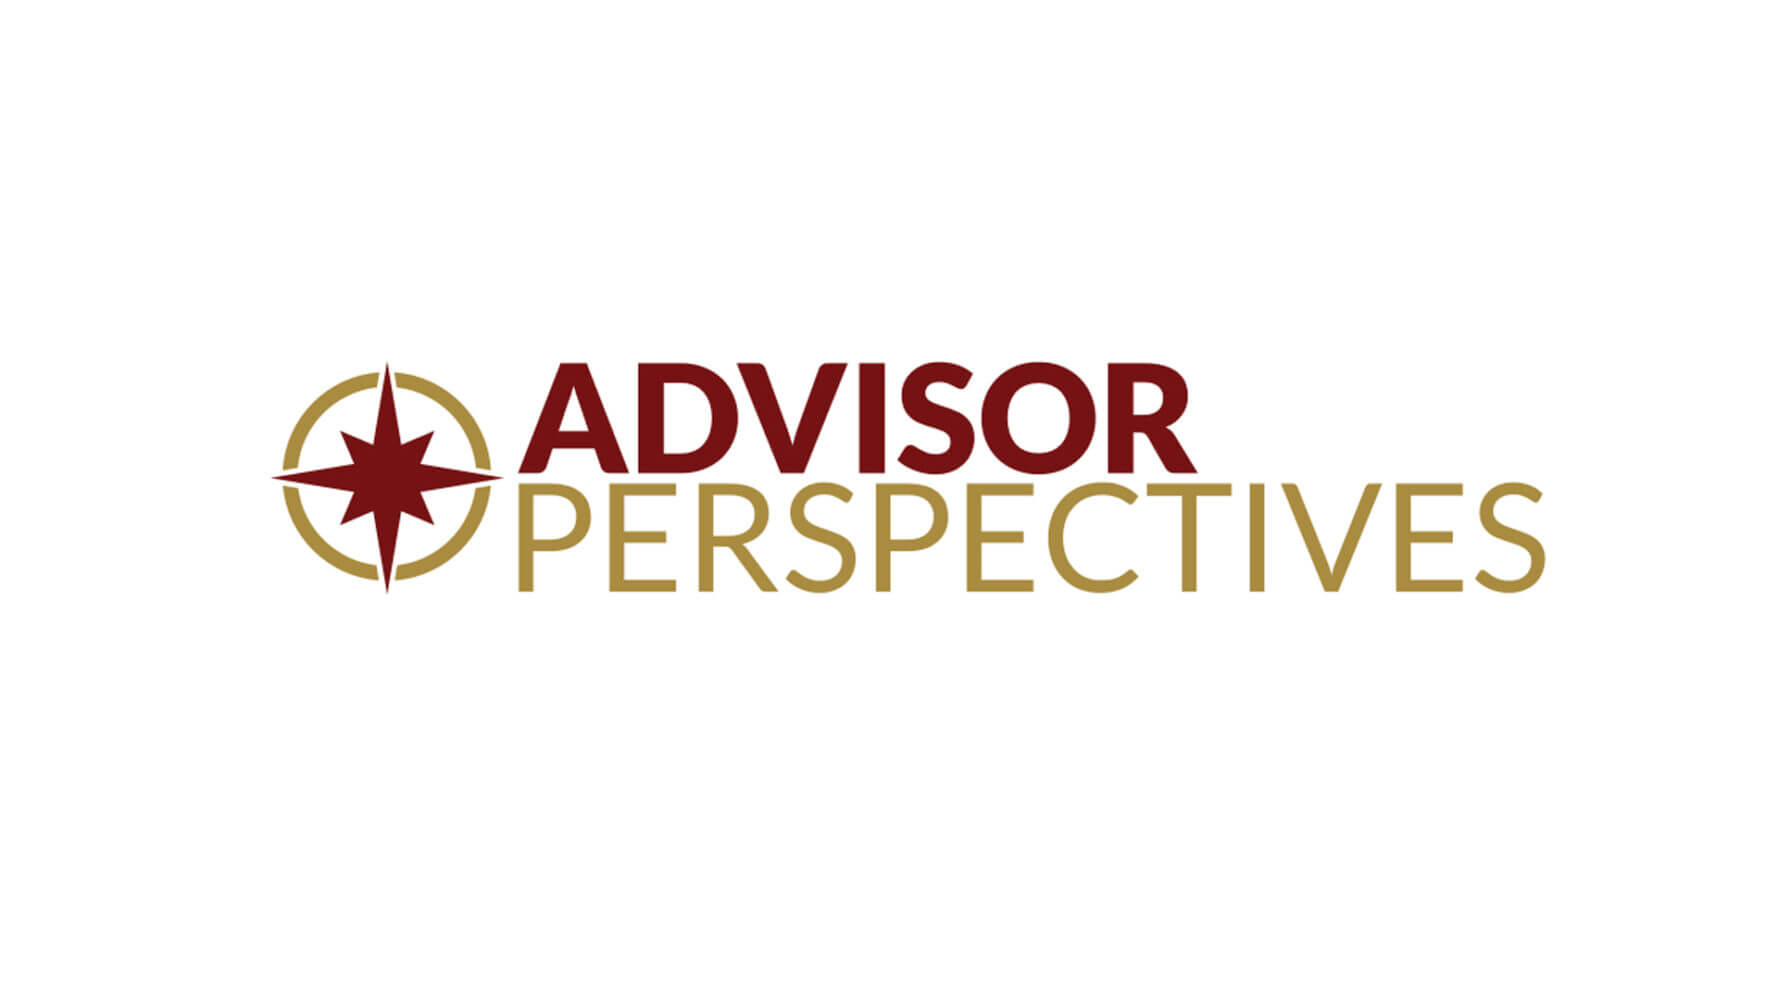 Advisor Perspectives logo.